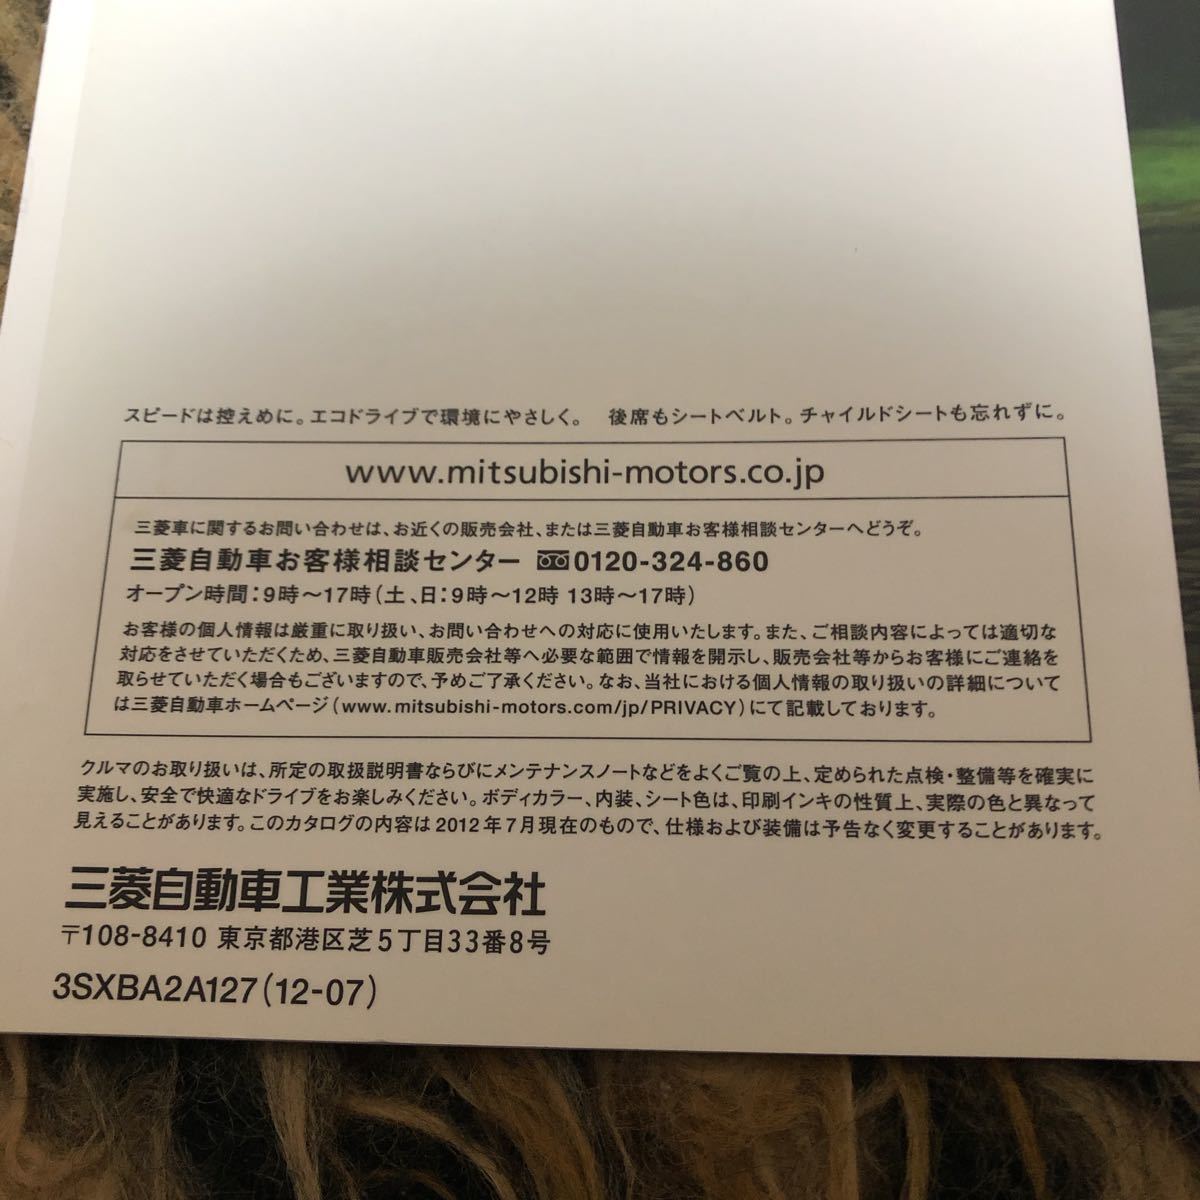  Mitsubishi Dignity Proudia каталог приложен брошюра с прайс-листом . годы предмет 